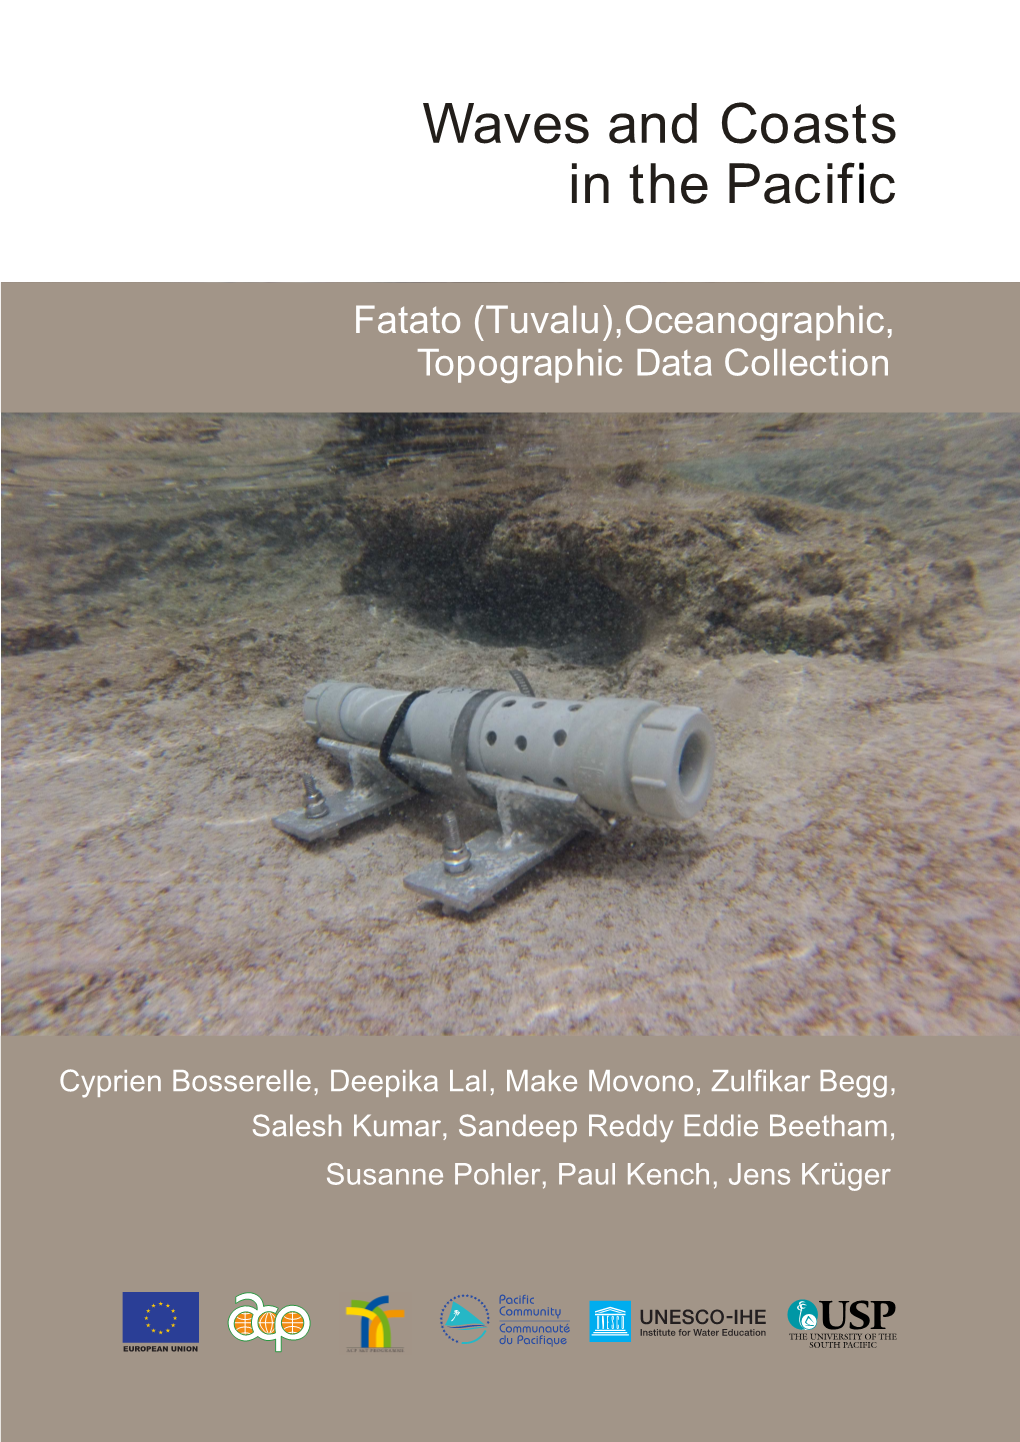 Fatato (Tuvalu), Oceanographic, Topographic Data Collection, SPC Technical Report SPC00045, 2016